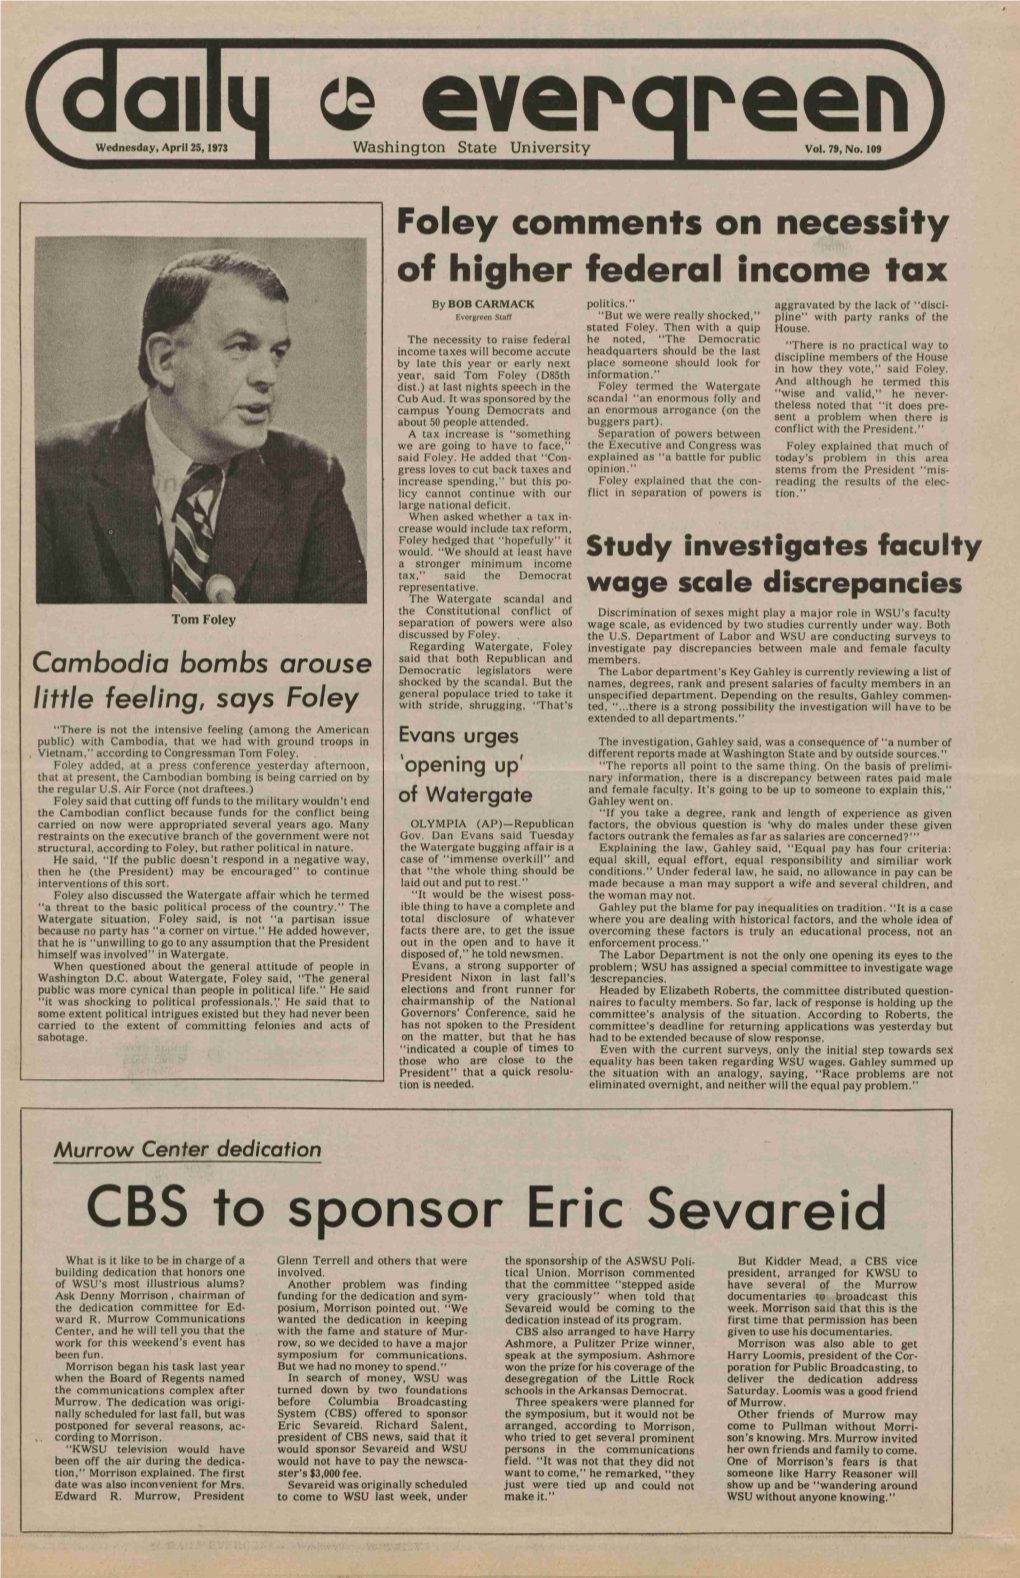 CBS to Sponsor Eric Sevareid